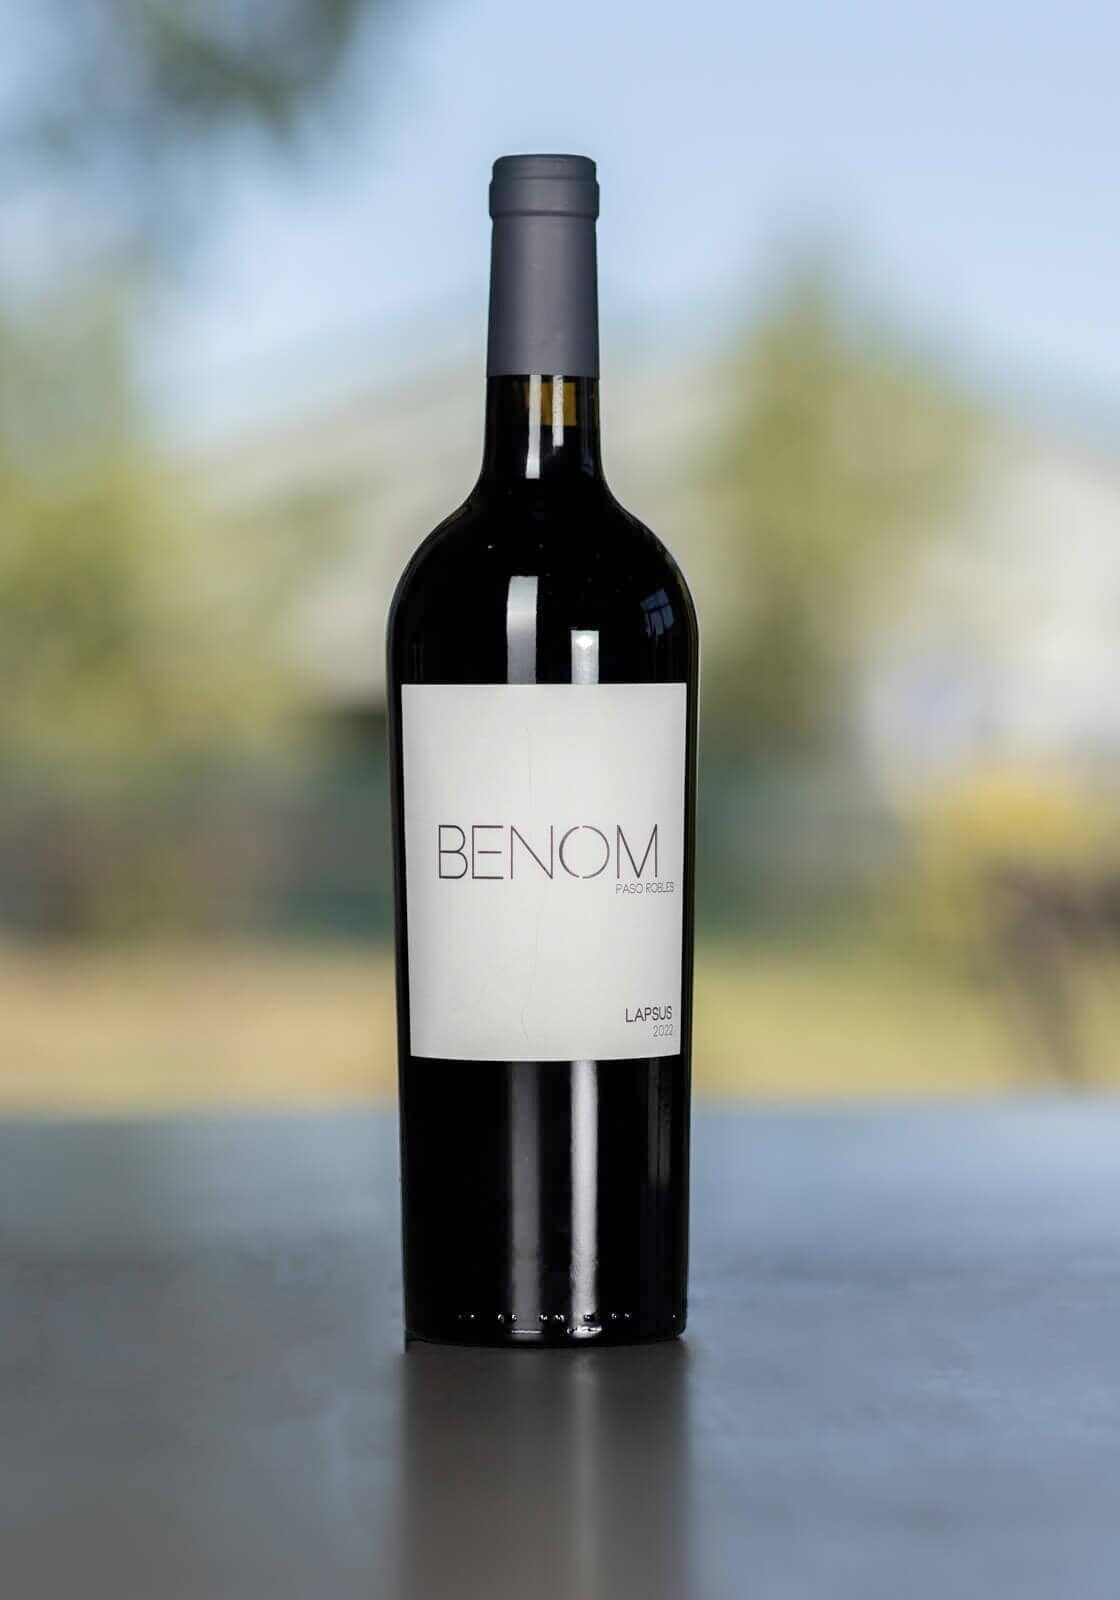 A bottle of 2022 Lapsus BENOM wine